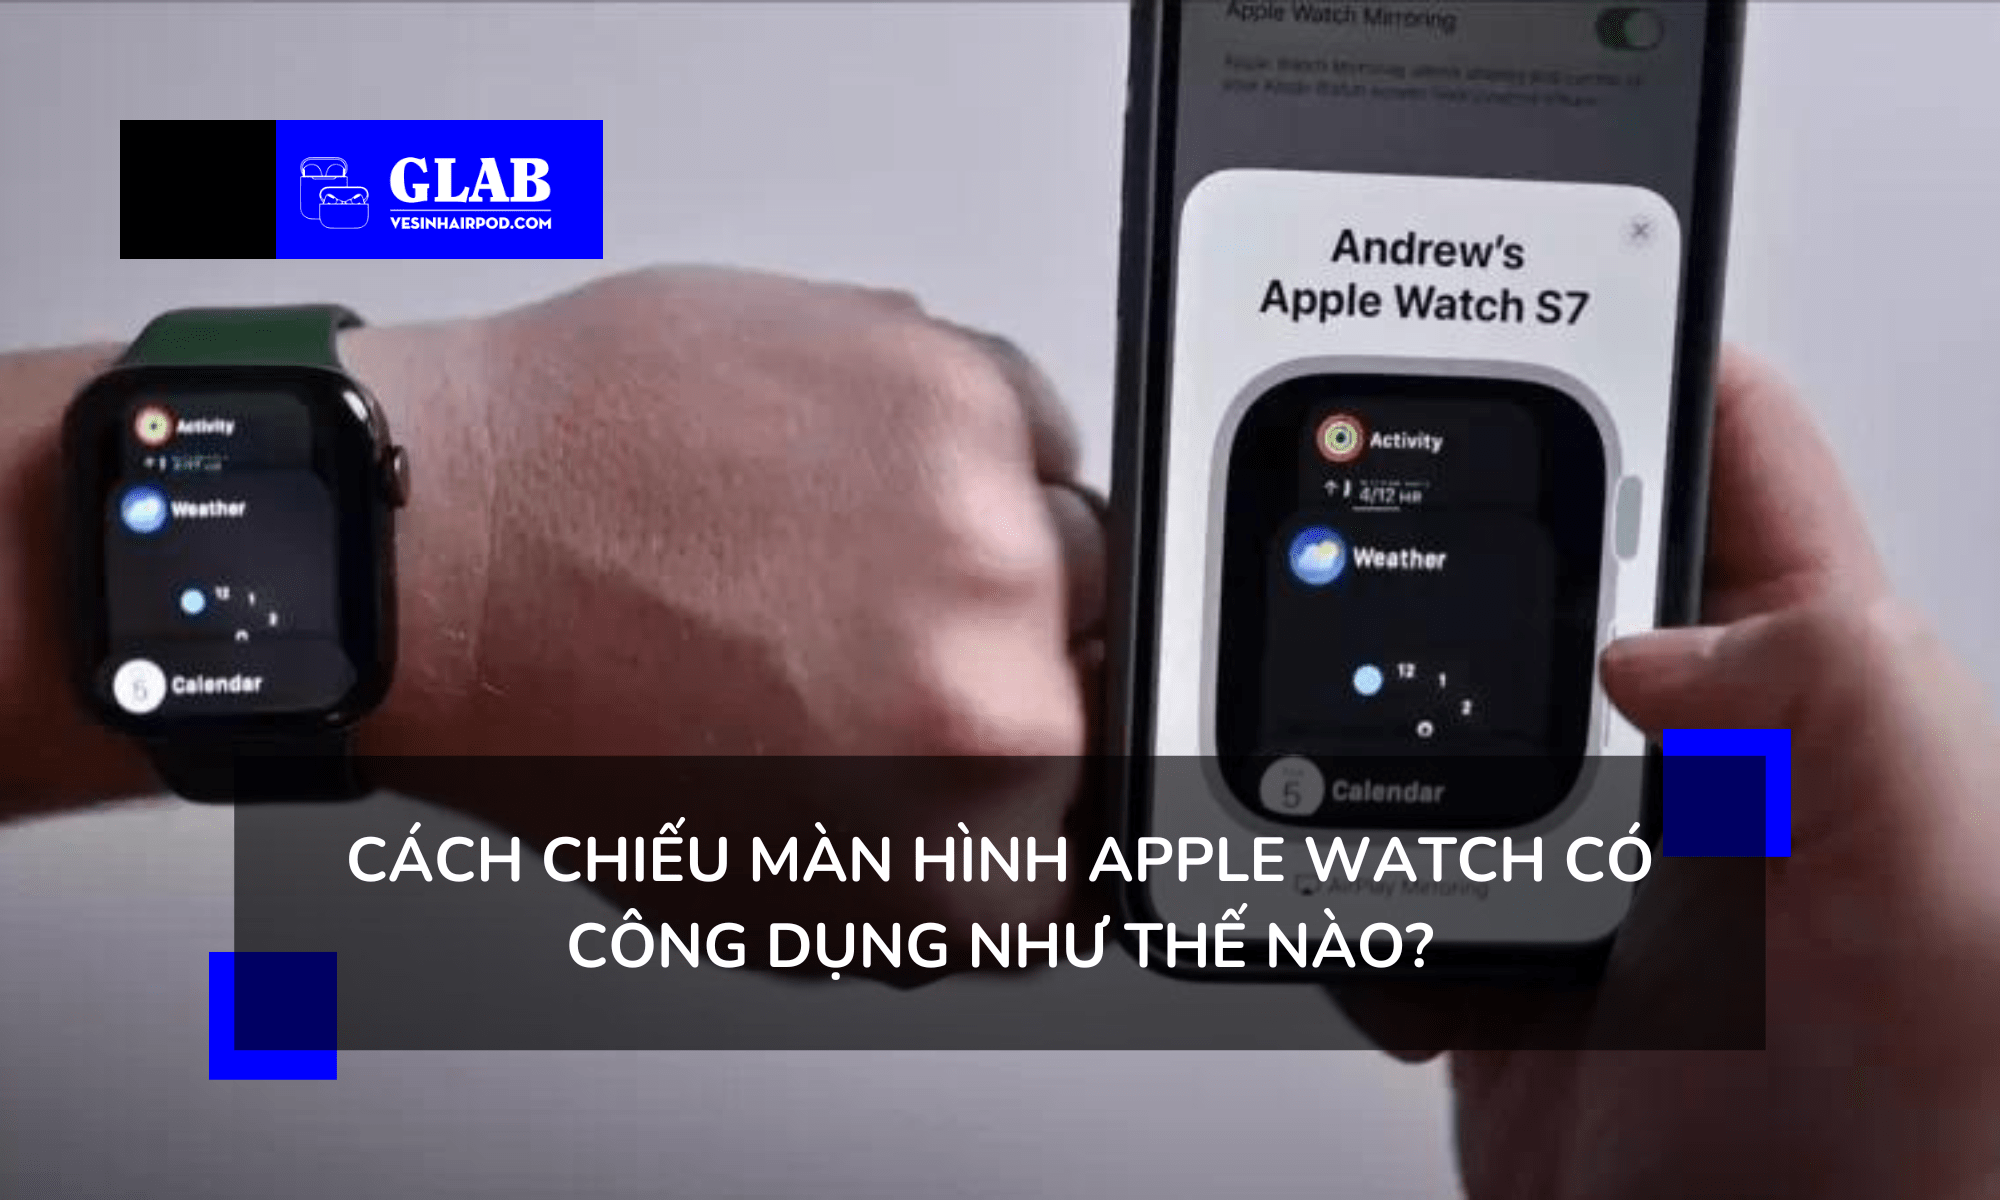 cach-chieu-man-hinh-apple-watch-tren-iphone